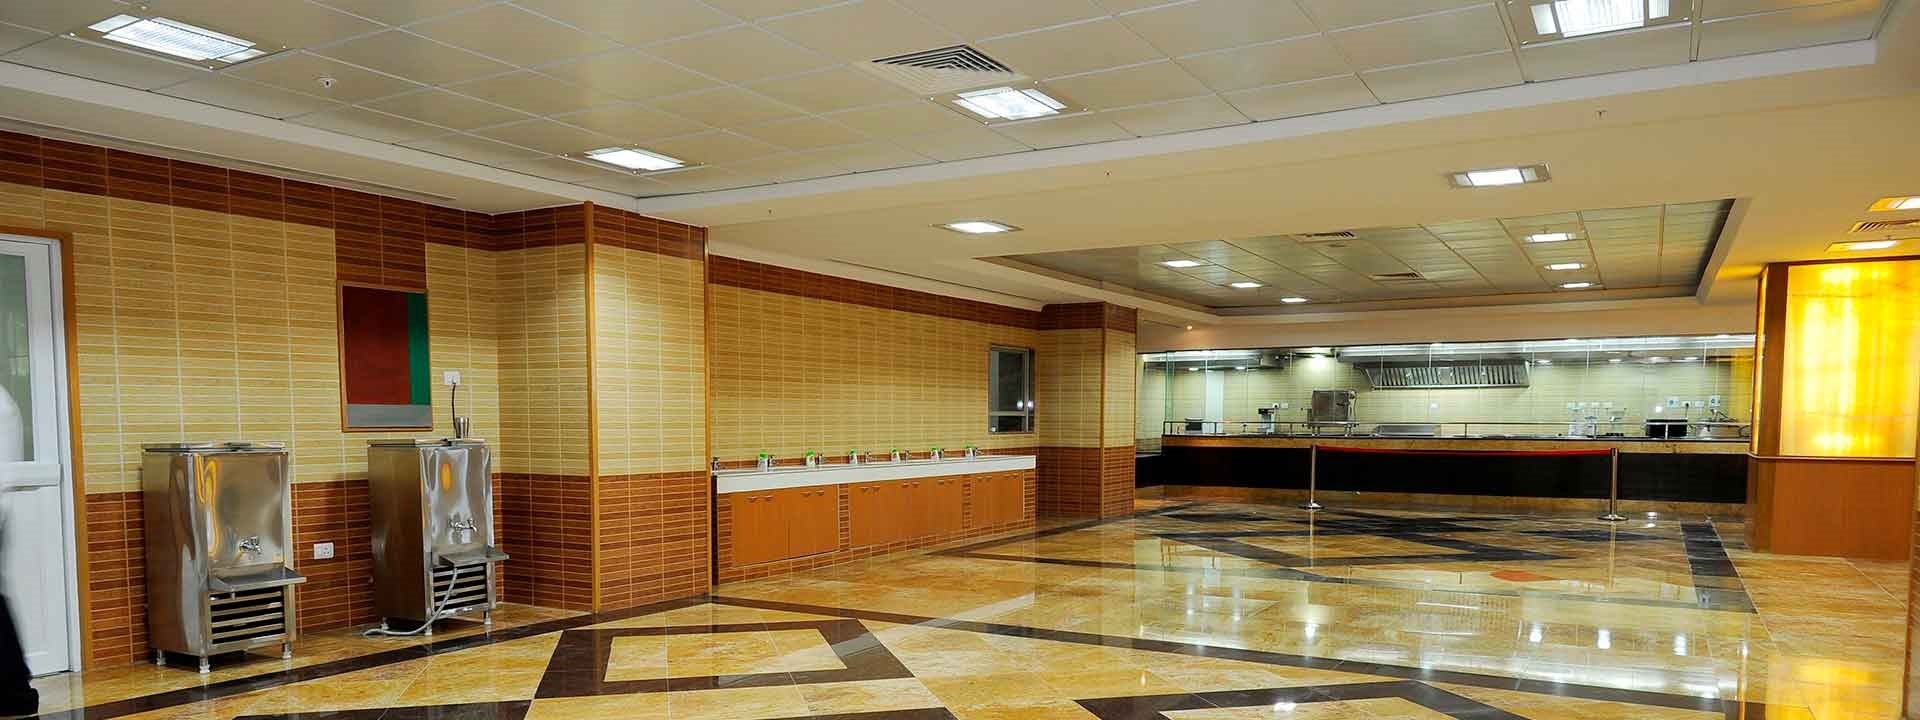 MIOT International Hospital in Chennai- L&T Construction